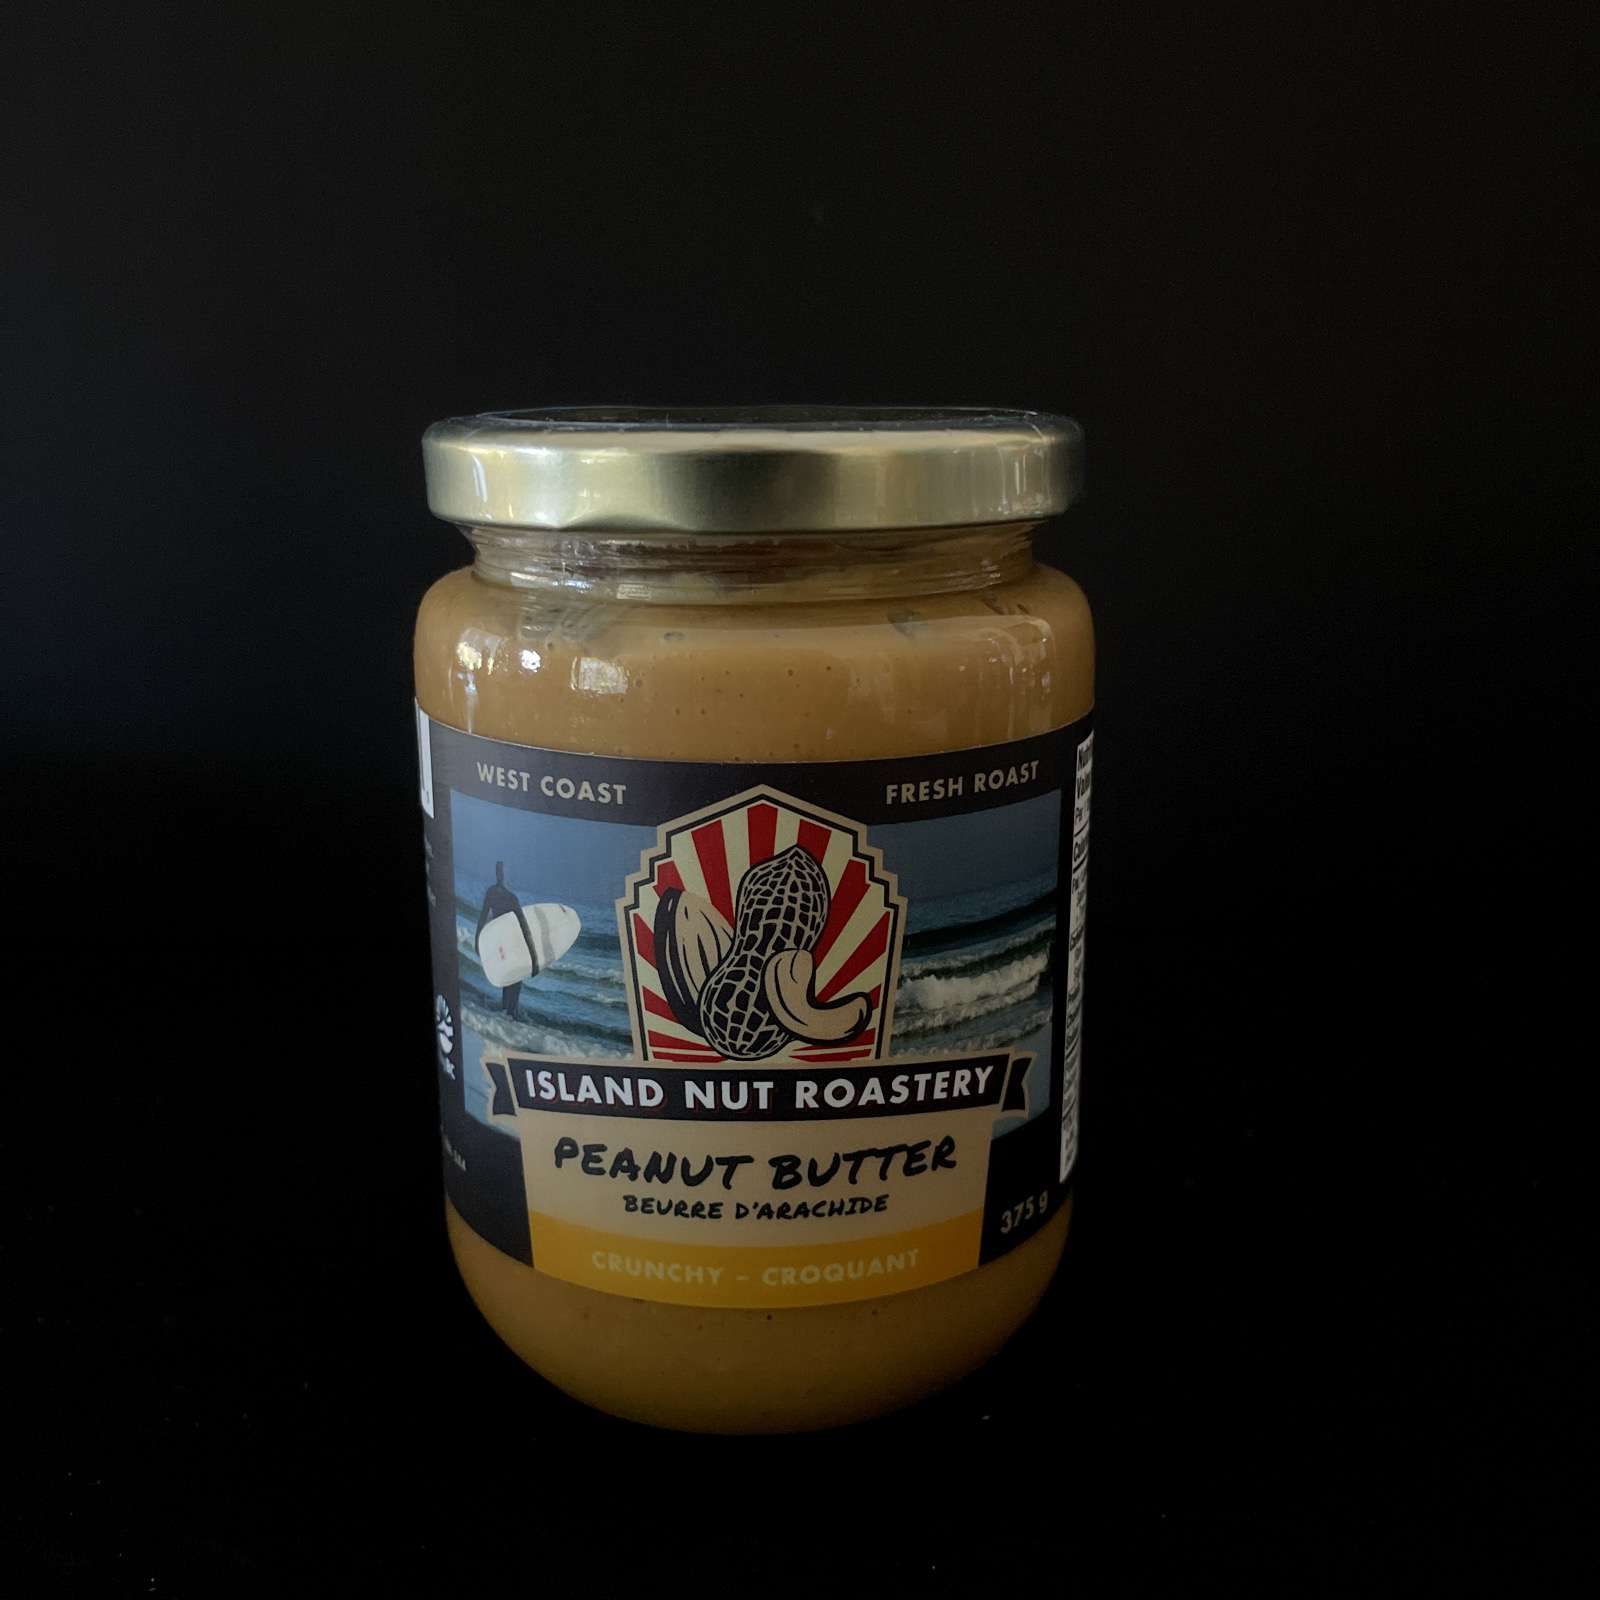 Island Nut Roastery: Peanut Butter 375g Crunchy